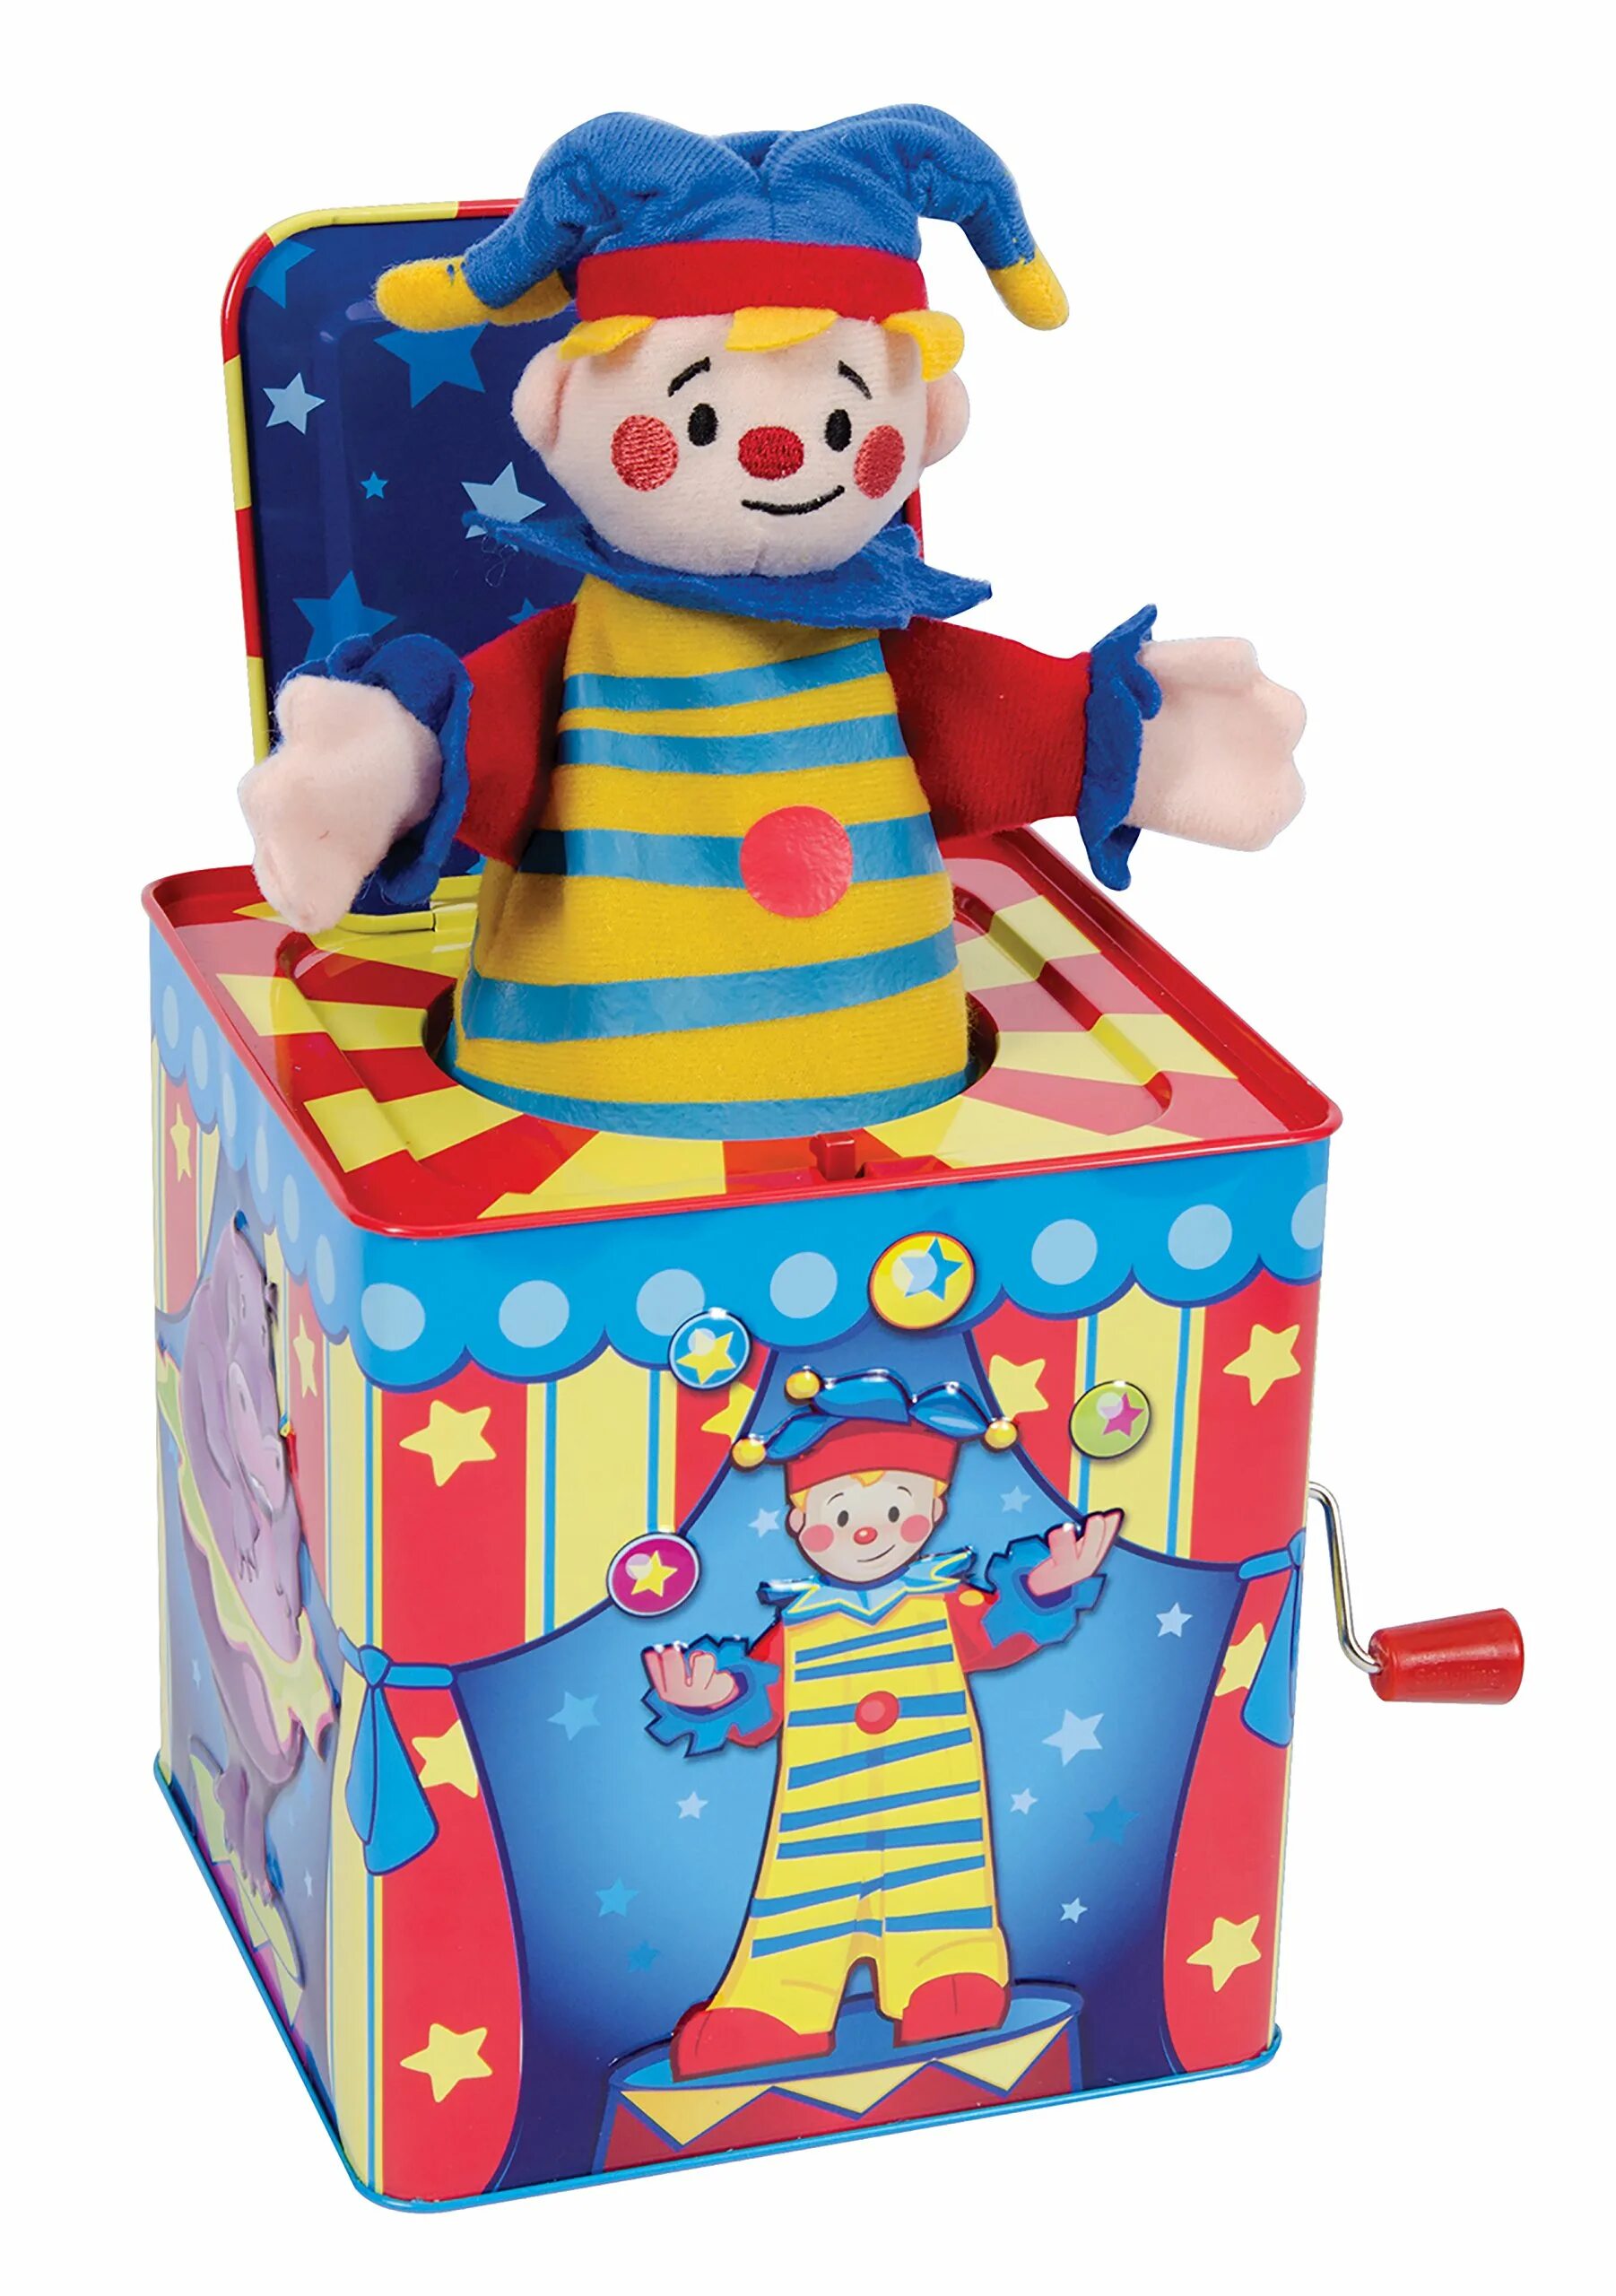 Fair hair puppet jack in the box. "Jack in the Box". Джек бокс. Jack Clown игрушка. Кукла Jack in the Box. Клоун Джек в коробке.